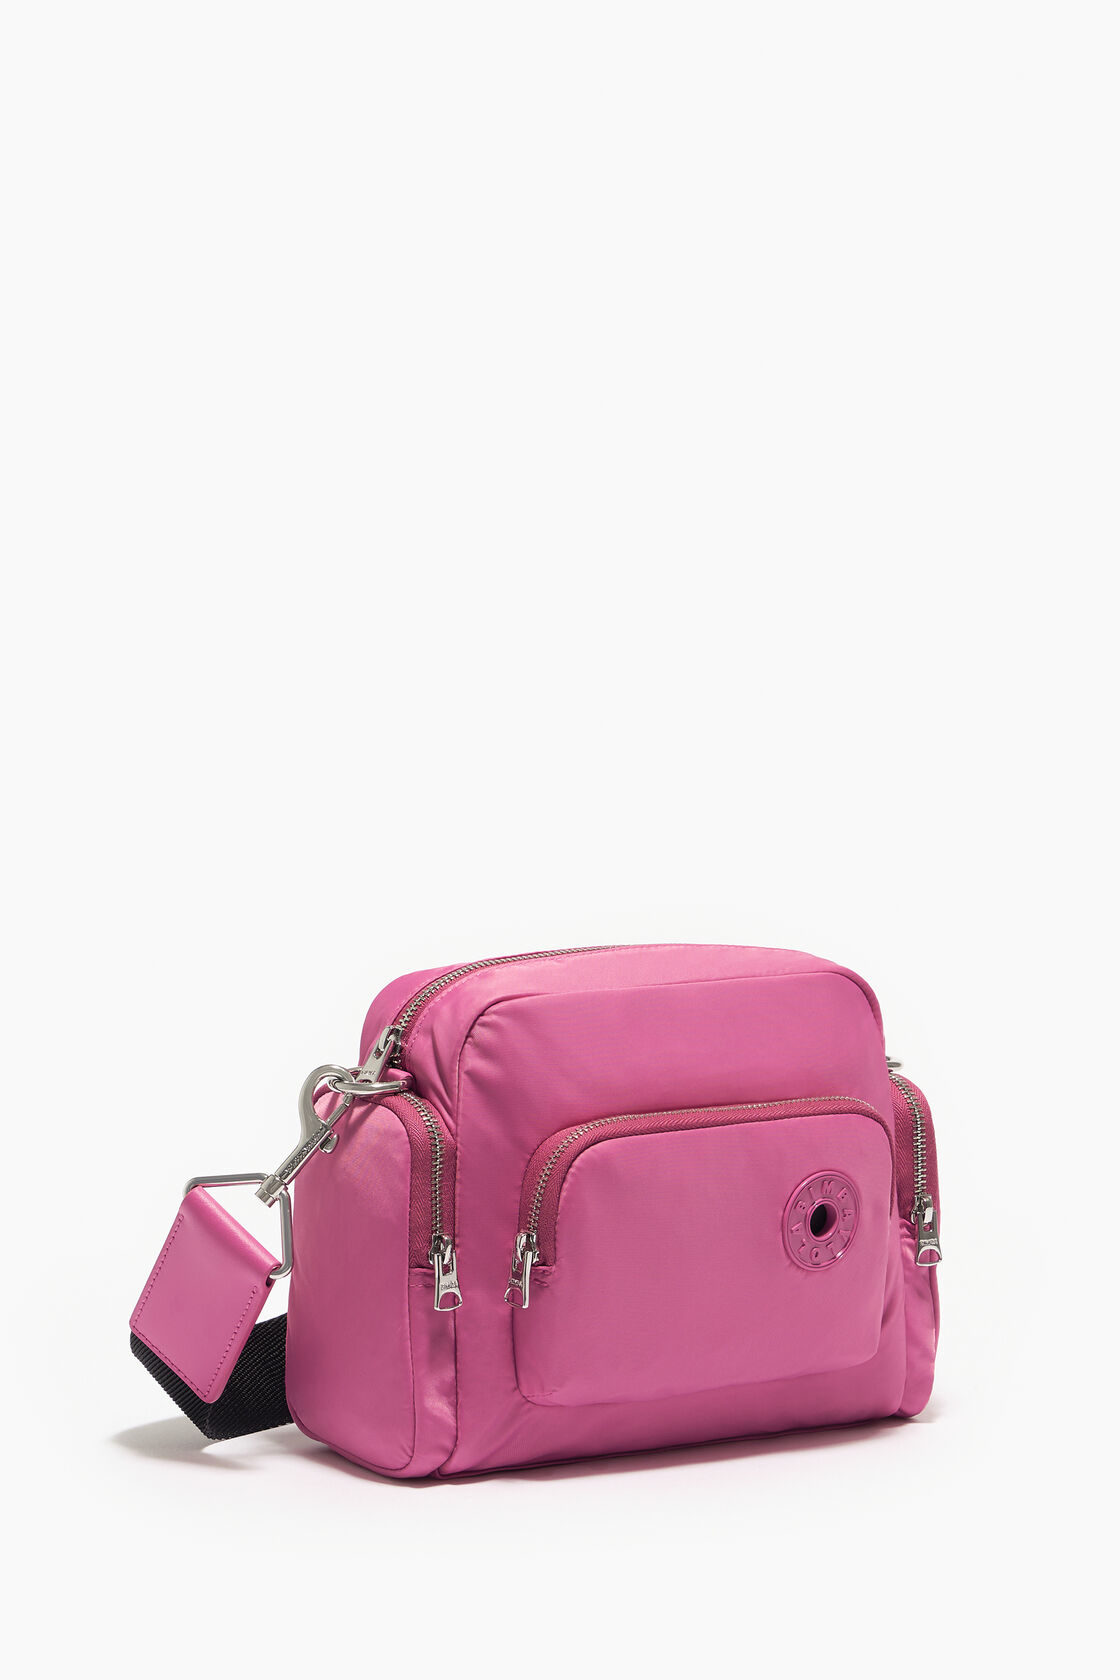 Bimba Y Lola cross body bag , pink strap, Women's Fashion, Bags